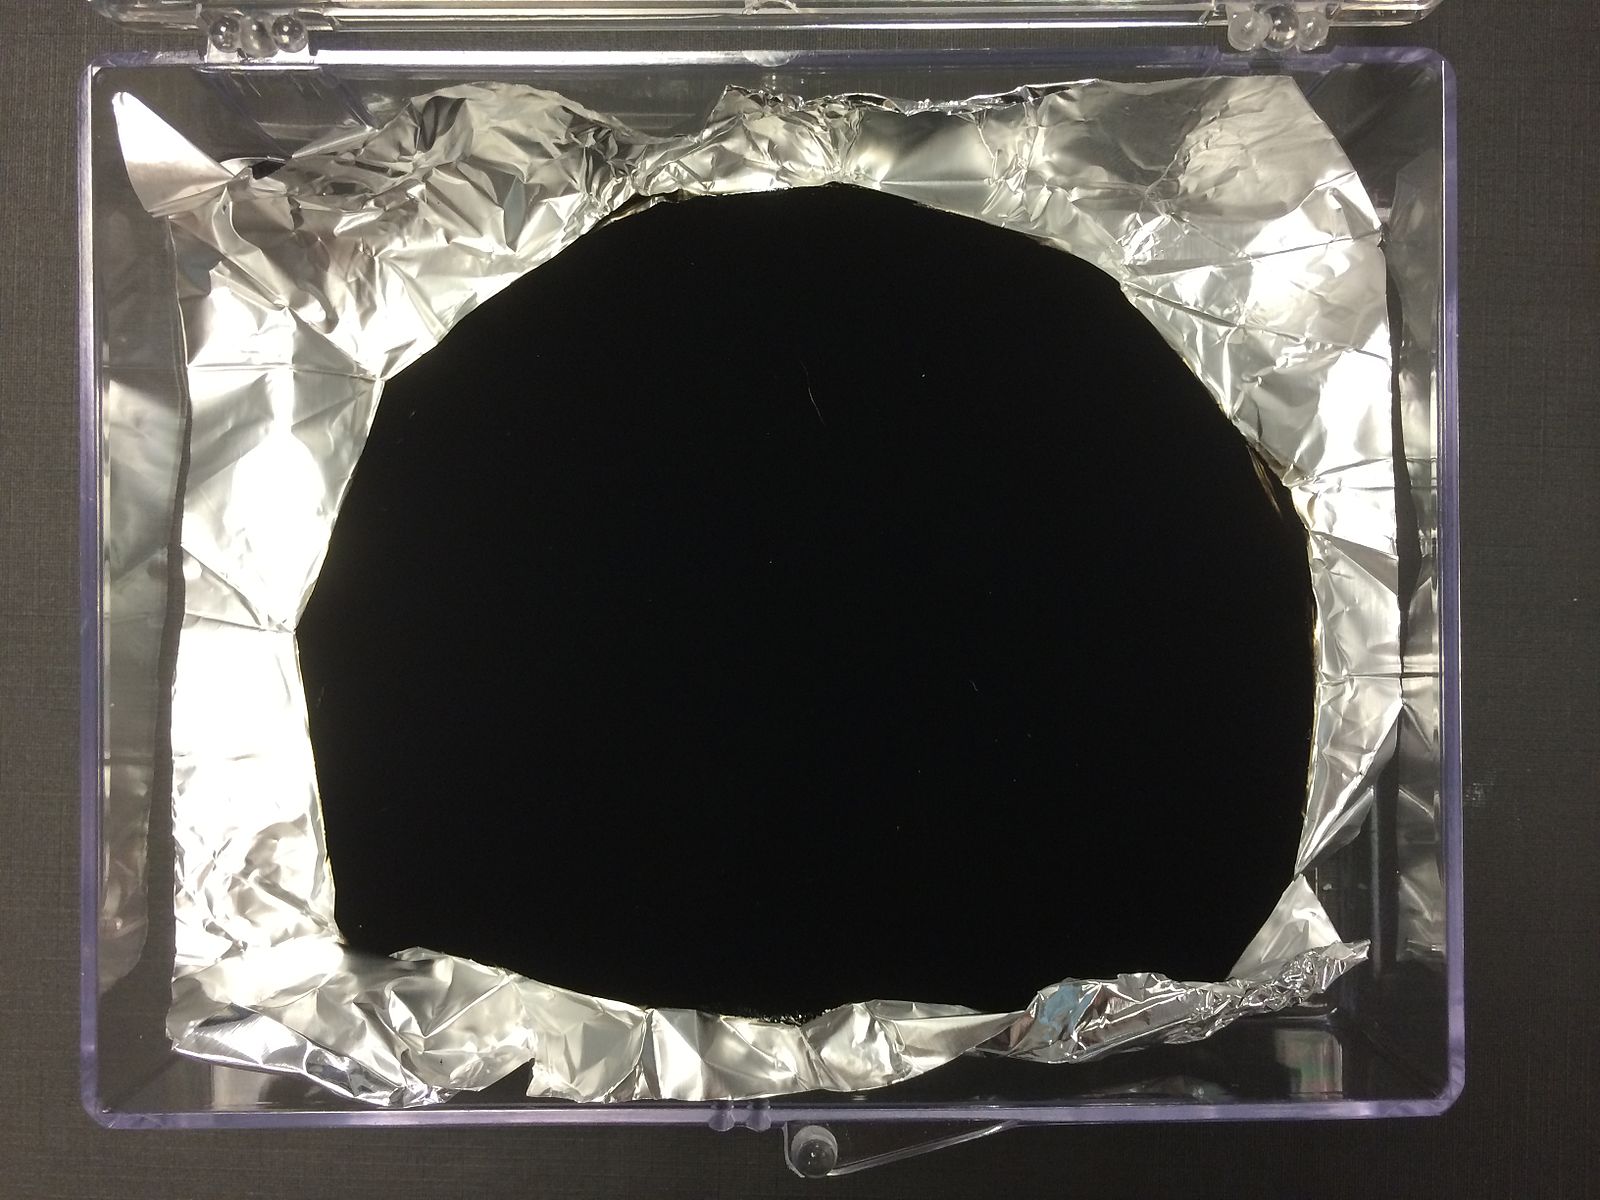 New 'blackest black' material absorbs 99.995 percent of light